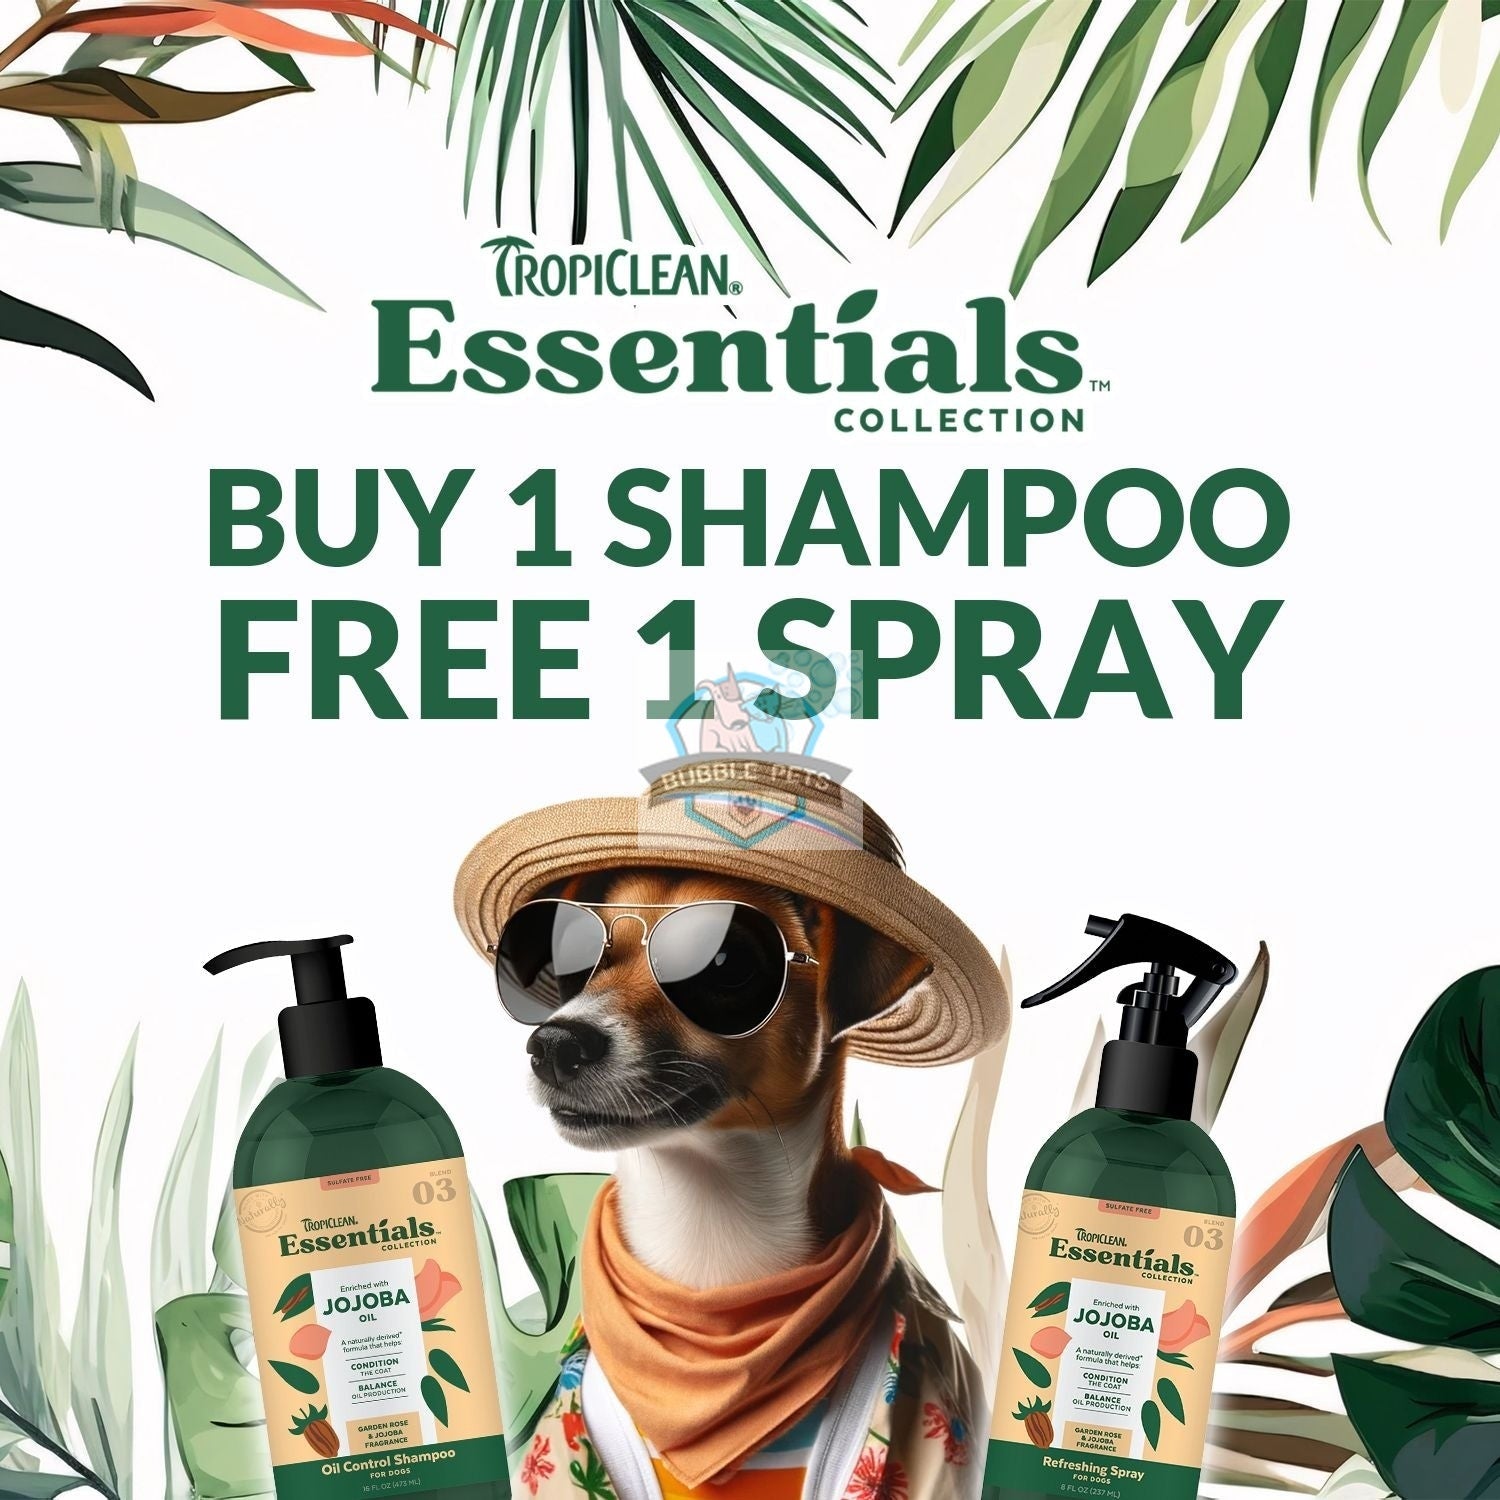 TropiClean Essentials Buy 1 Shampoo Free 1 Spray Promotion